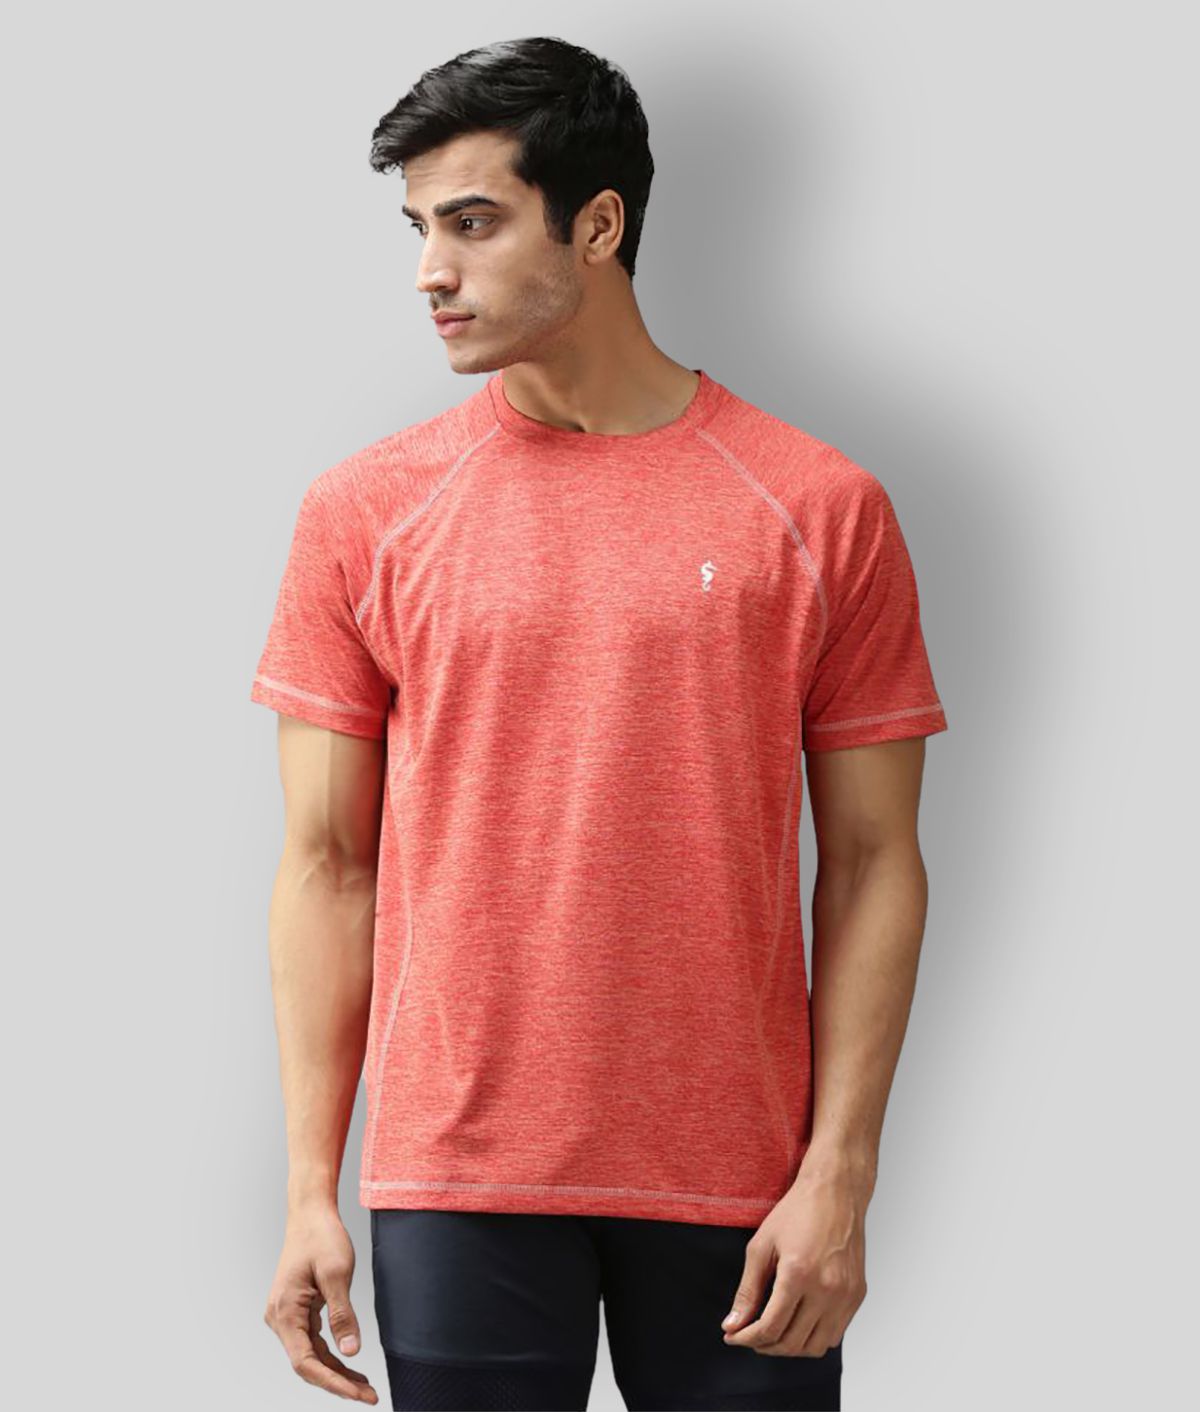     			EPPE - Orange Cotton Regular Fit Men's Sports T-Shirt ( Pack of 1 )